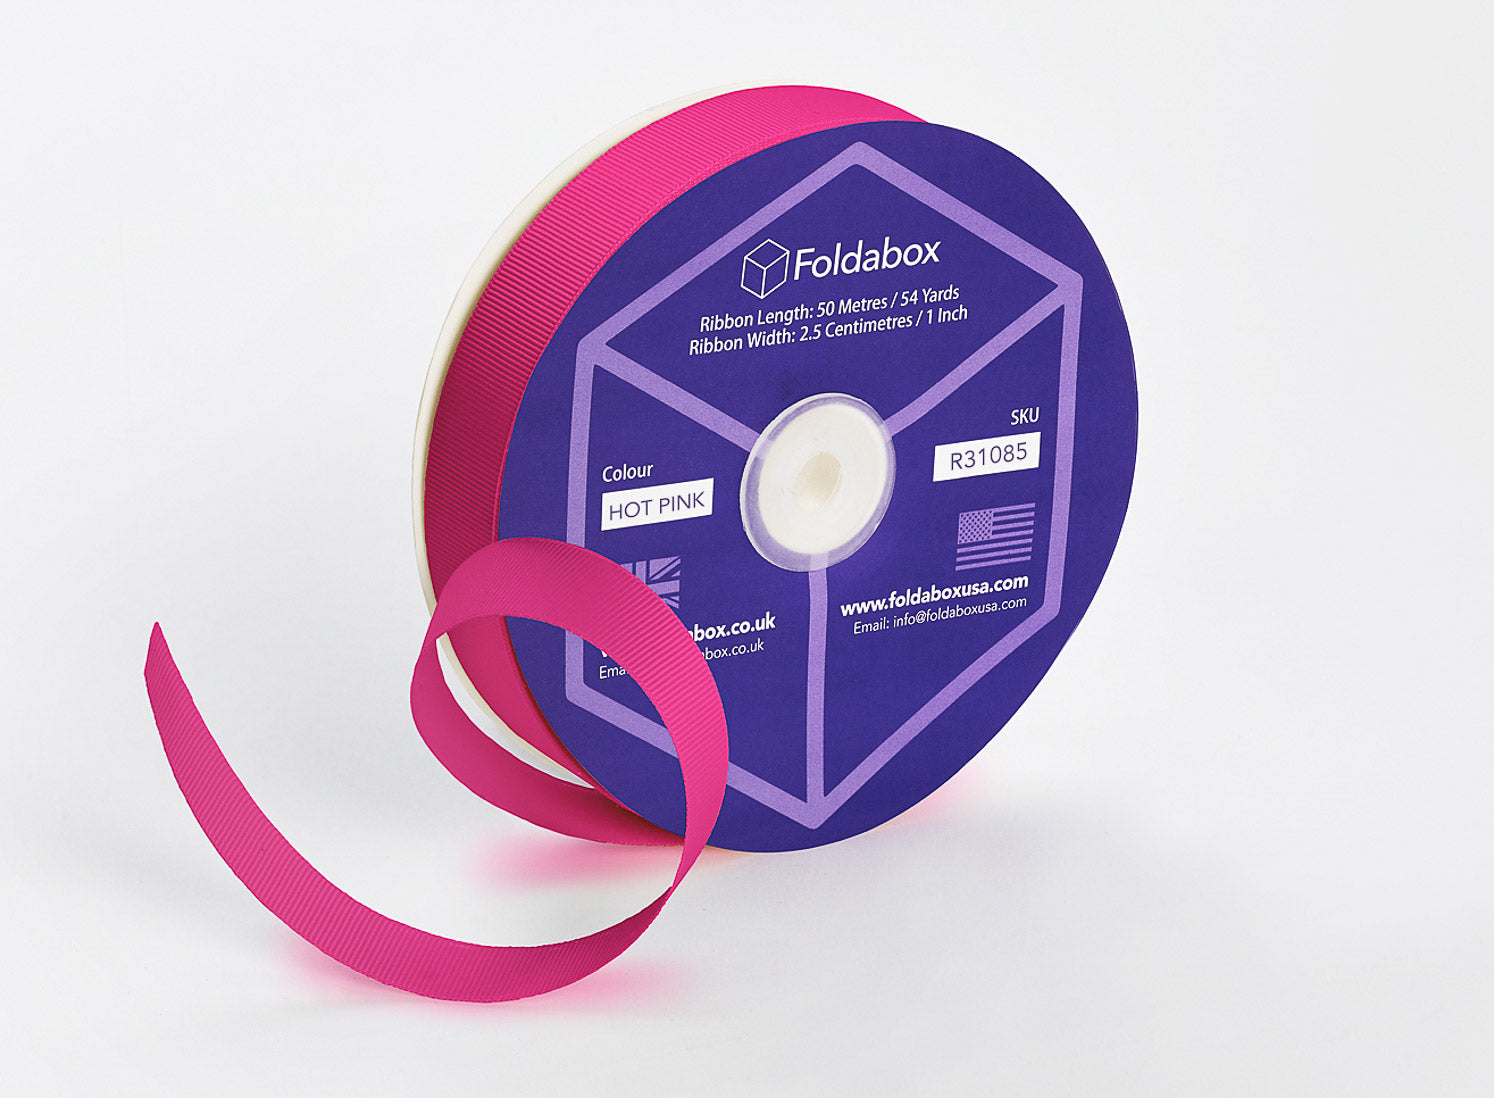 Hot Pink Grosgrain Ribbon 54 Yards x 1" from Foldabox USA